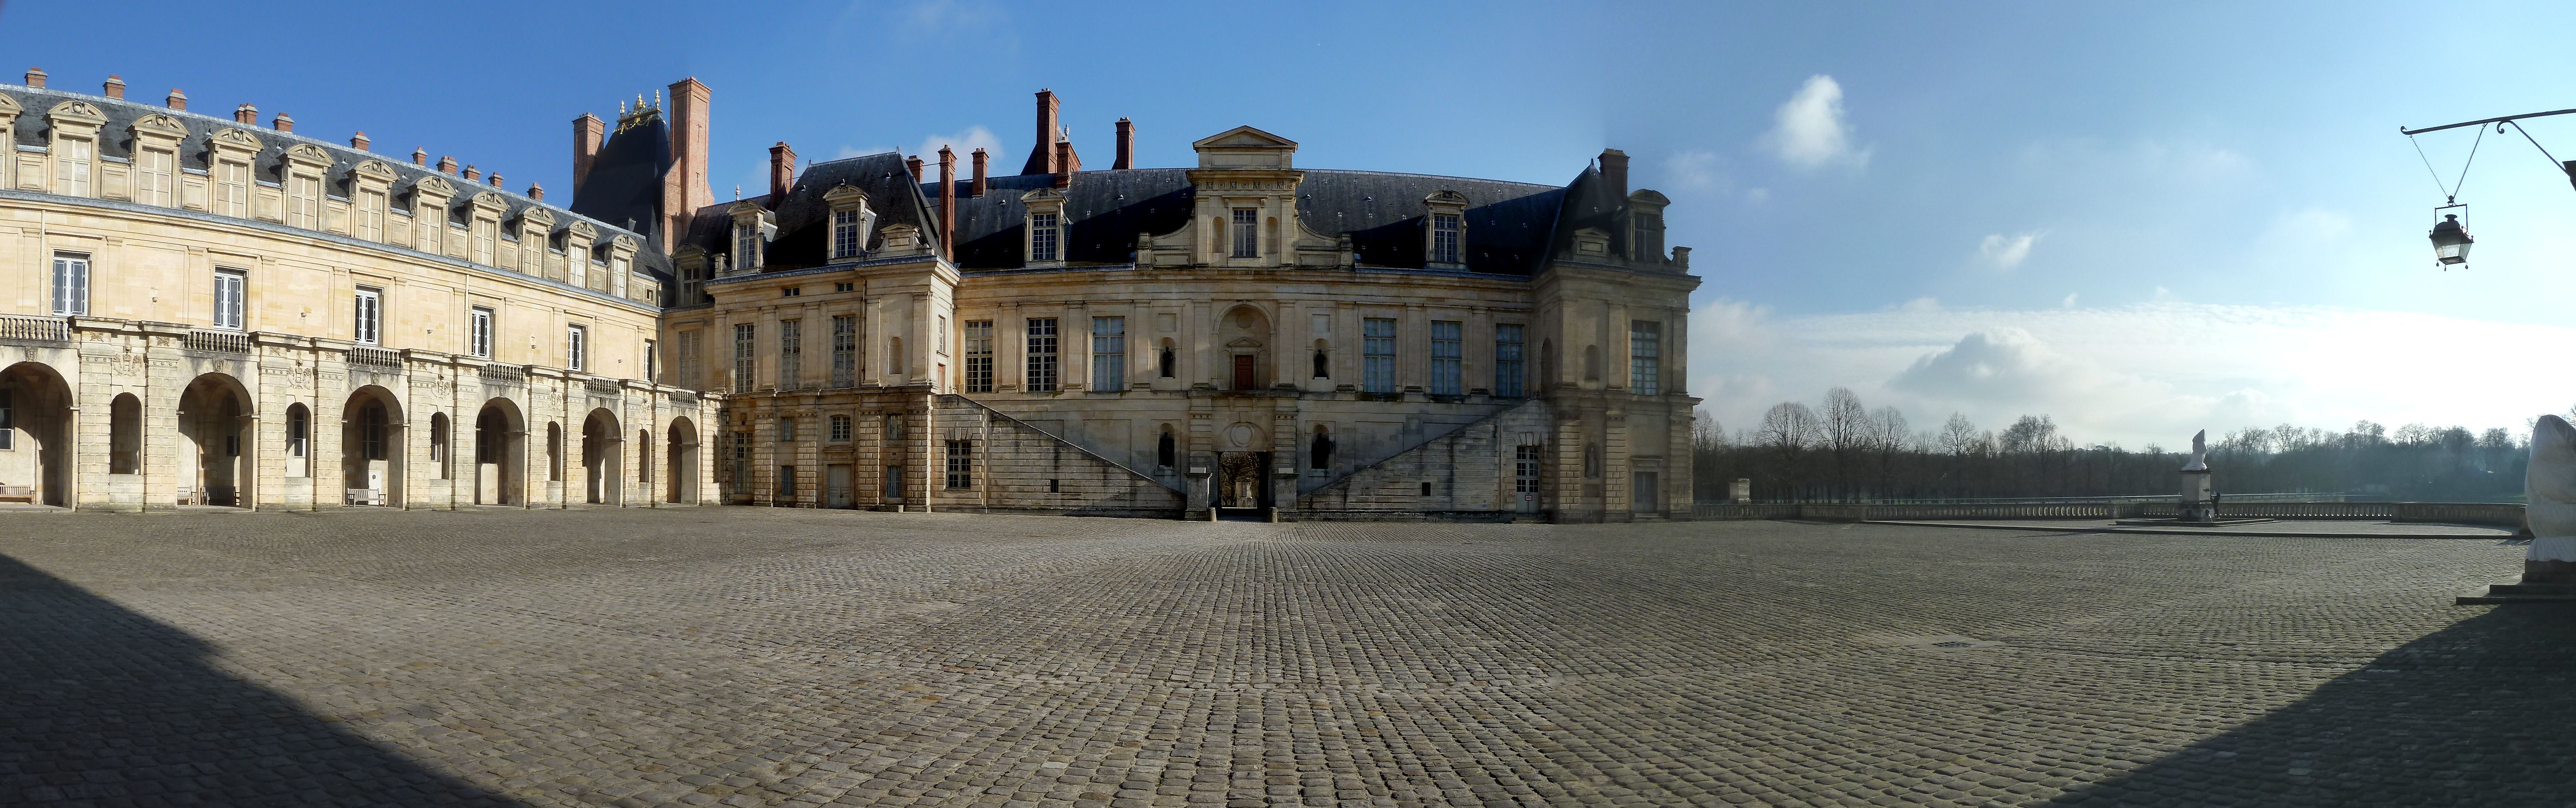 File:Chateau de Fontainebleau FRA 009.JPG - Wikimedia Commons